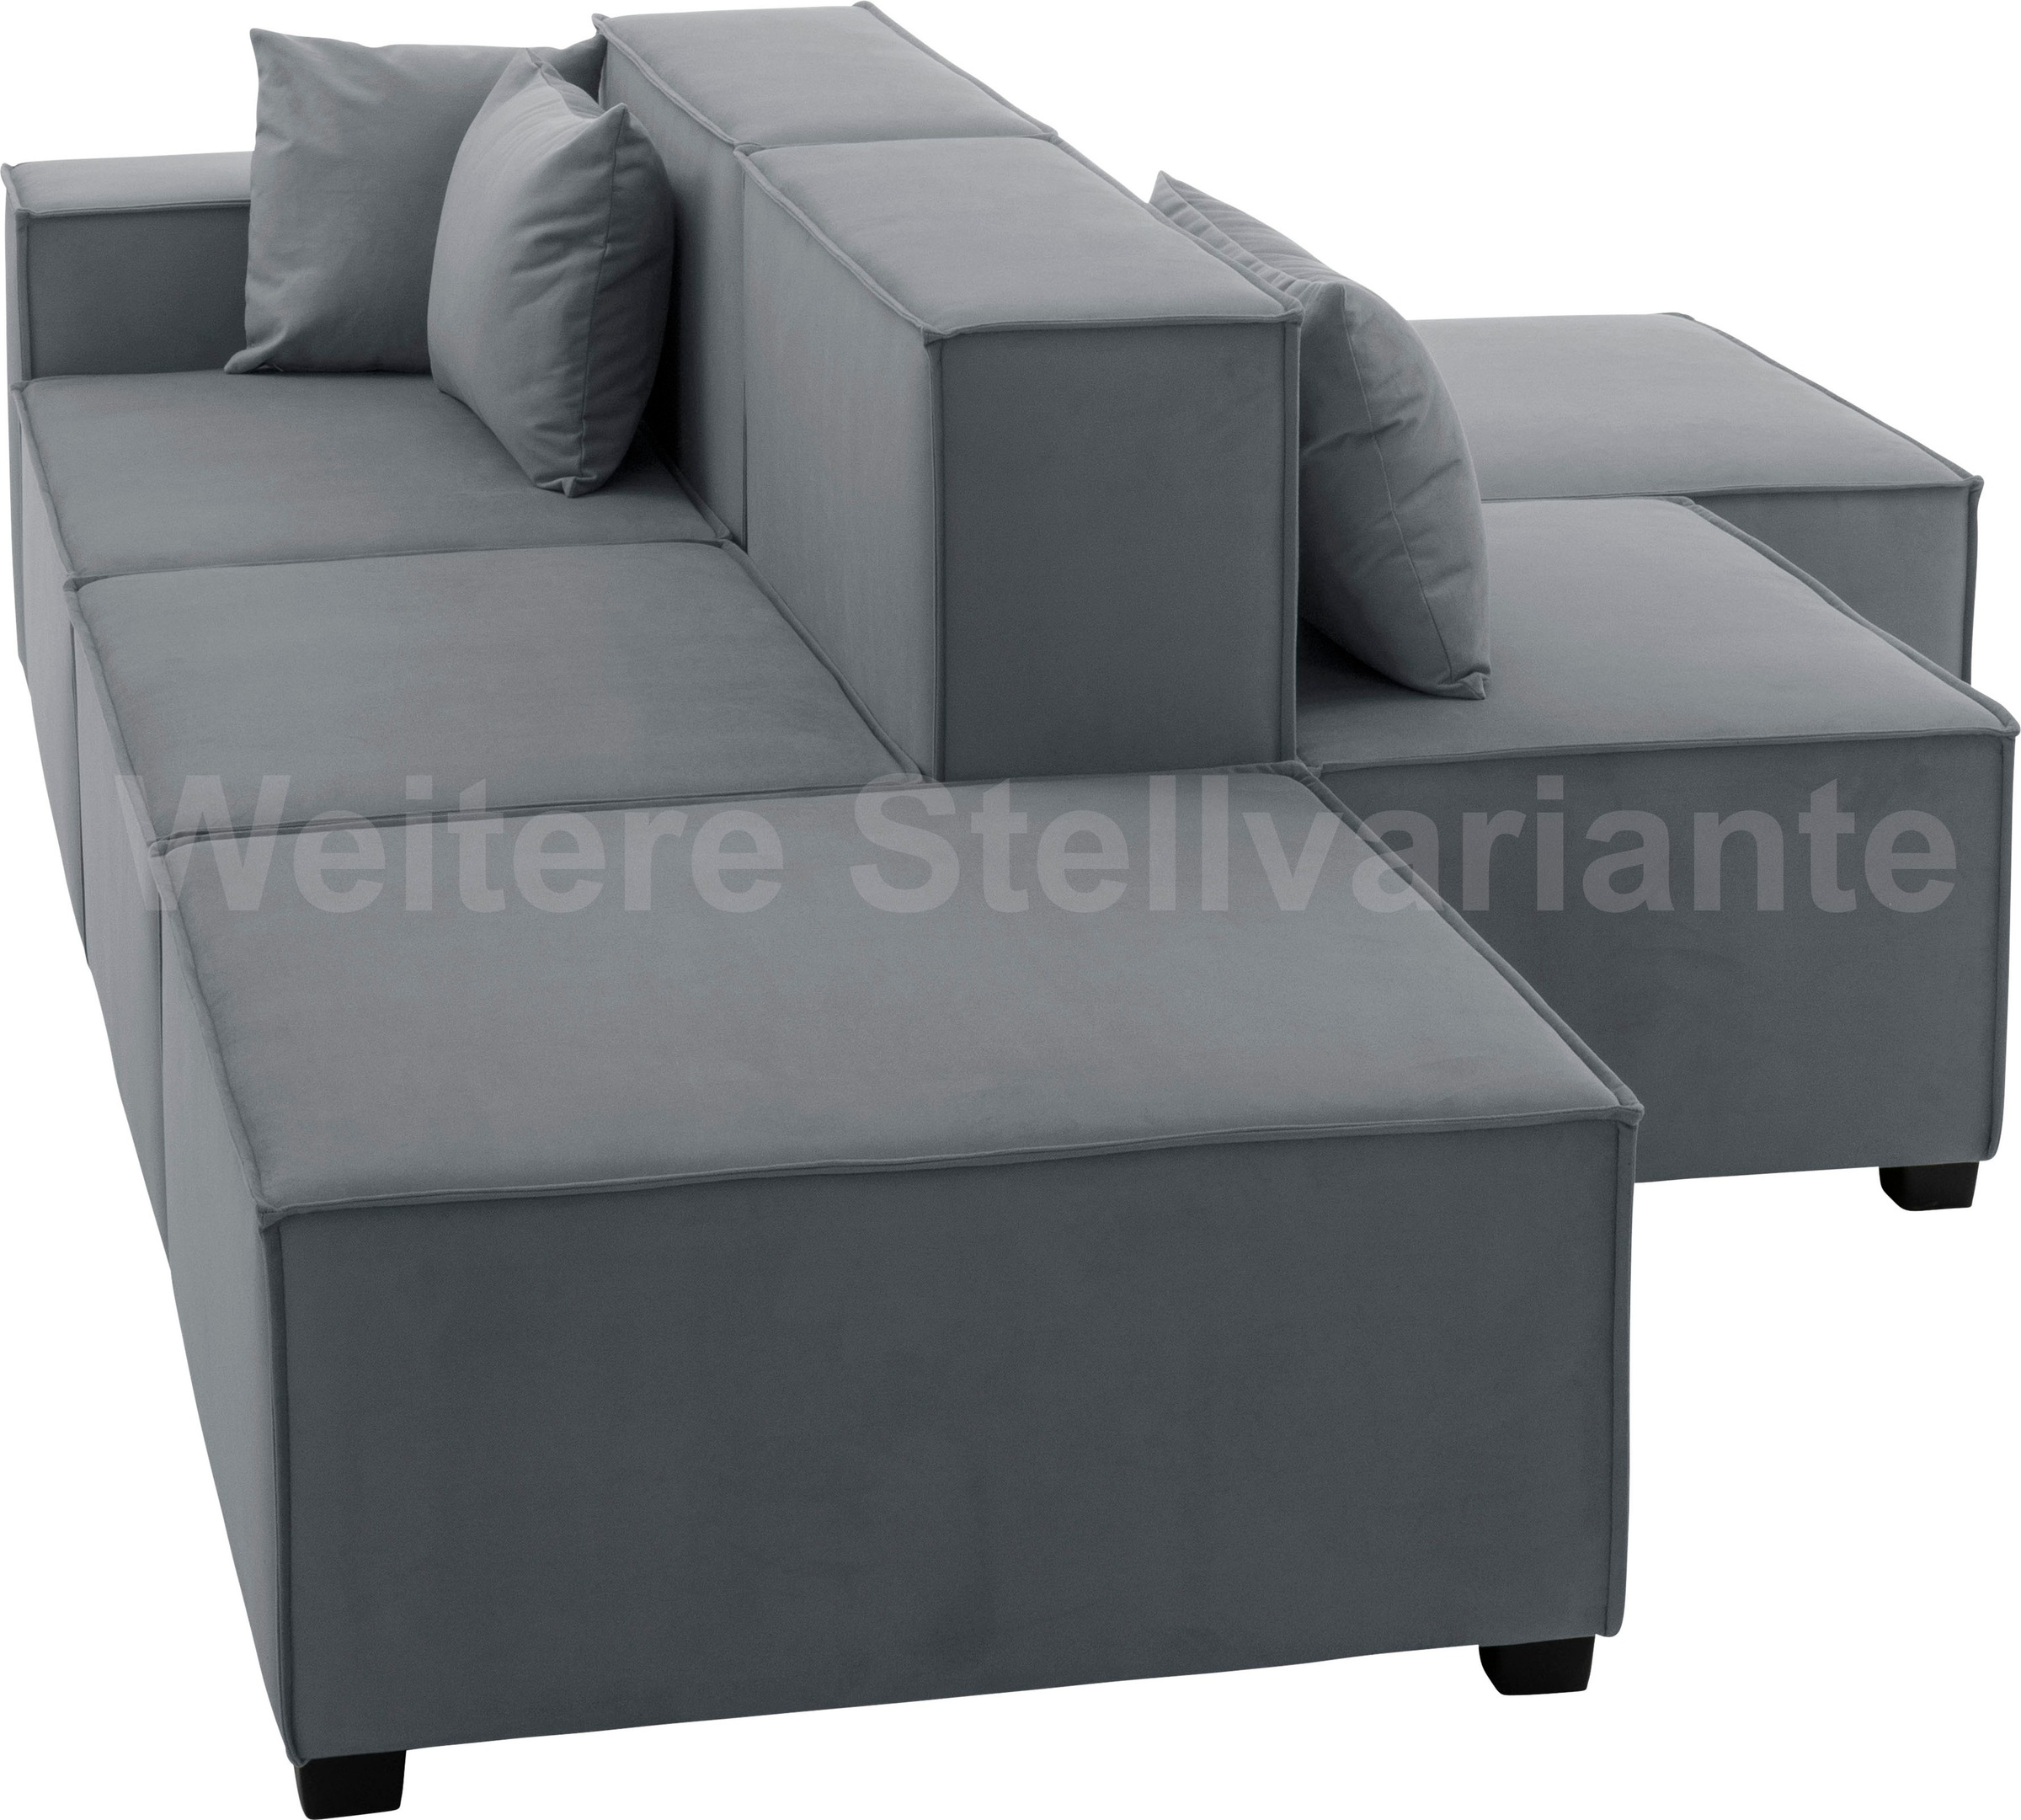 Max Winzer® Wohnlandschaft »MOVE«, (Set), Sofa-Set 03 aus 8 Sitz-Elementen, inklusive 3 Zierkissen, kombinierbar